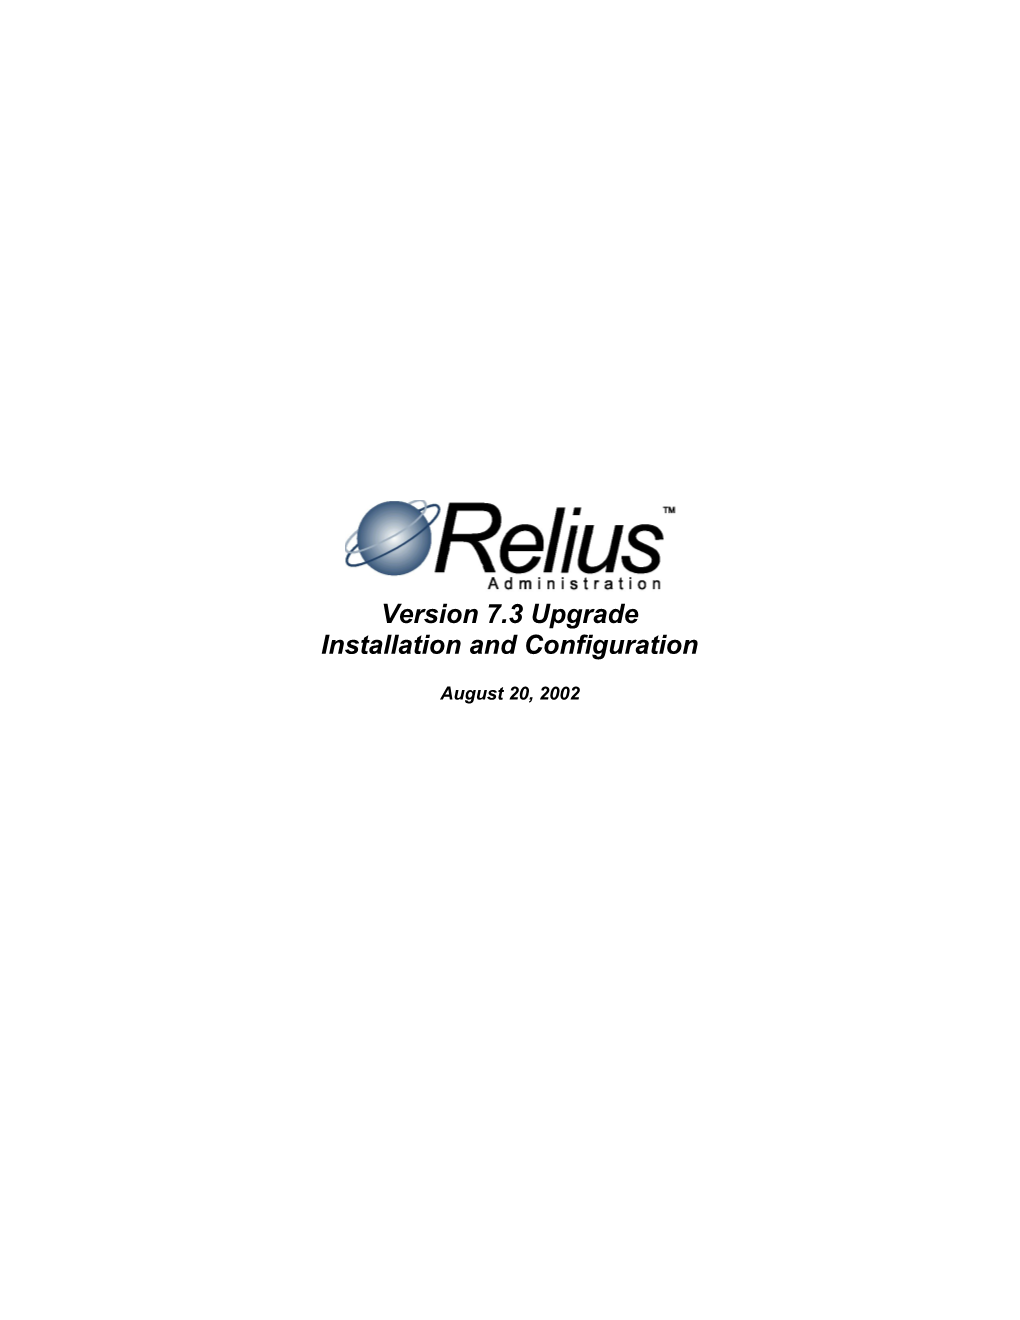 Relius Admin. 7.3 Installation and Configuration